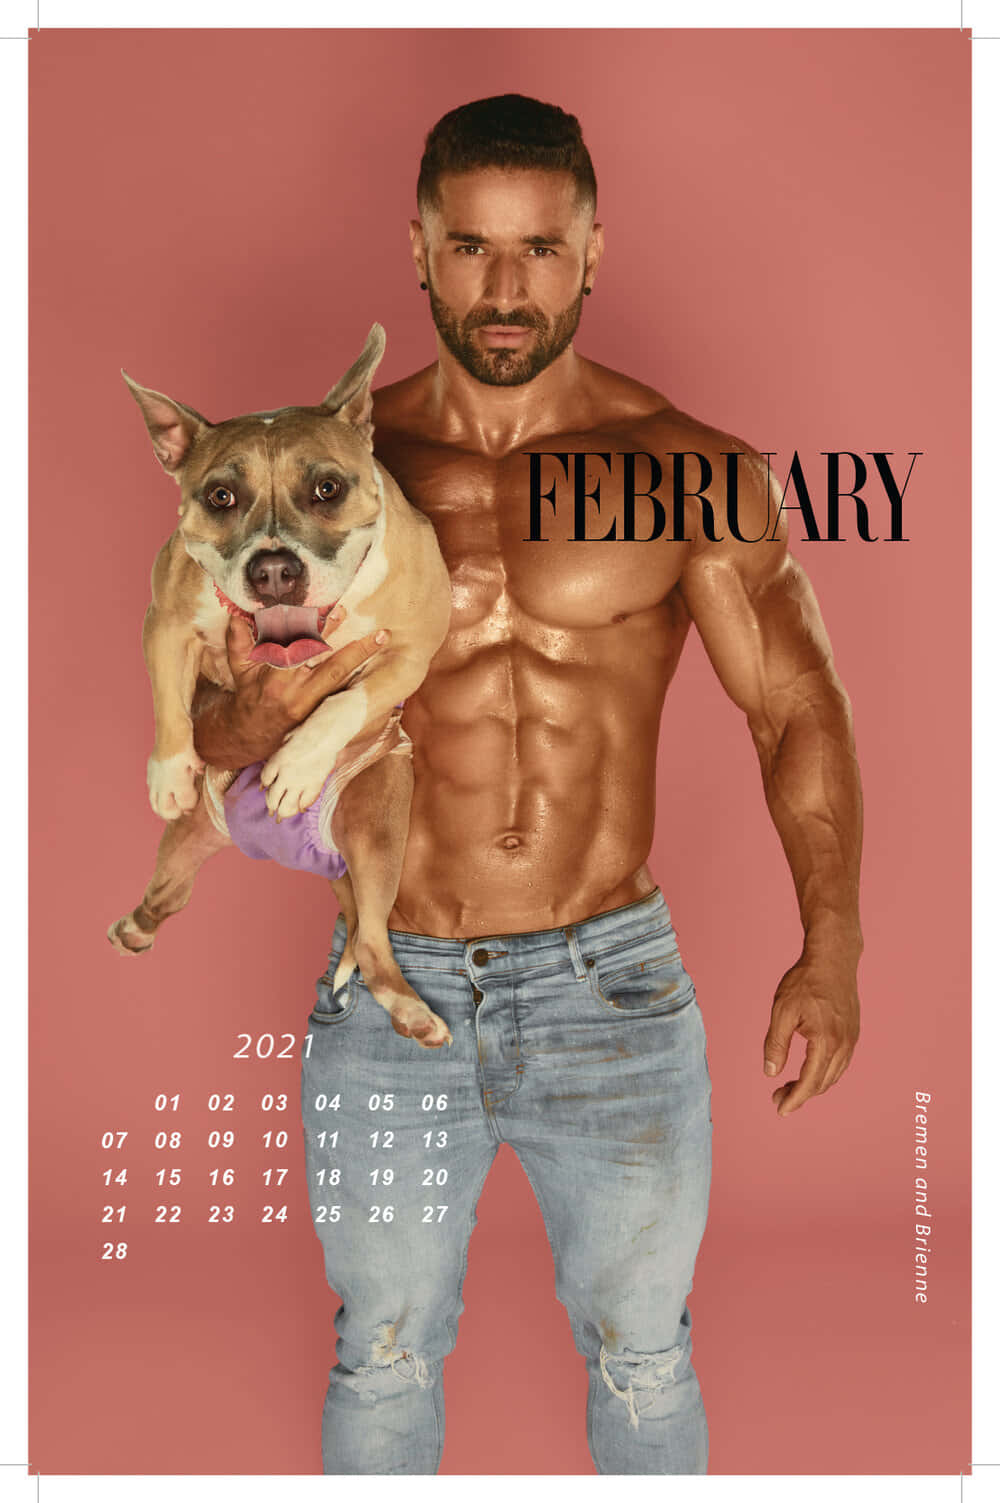 A Calendar With A Man Holding A Dog